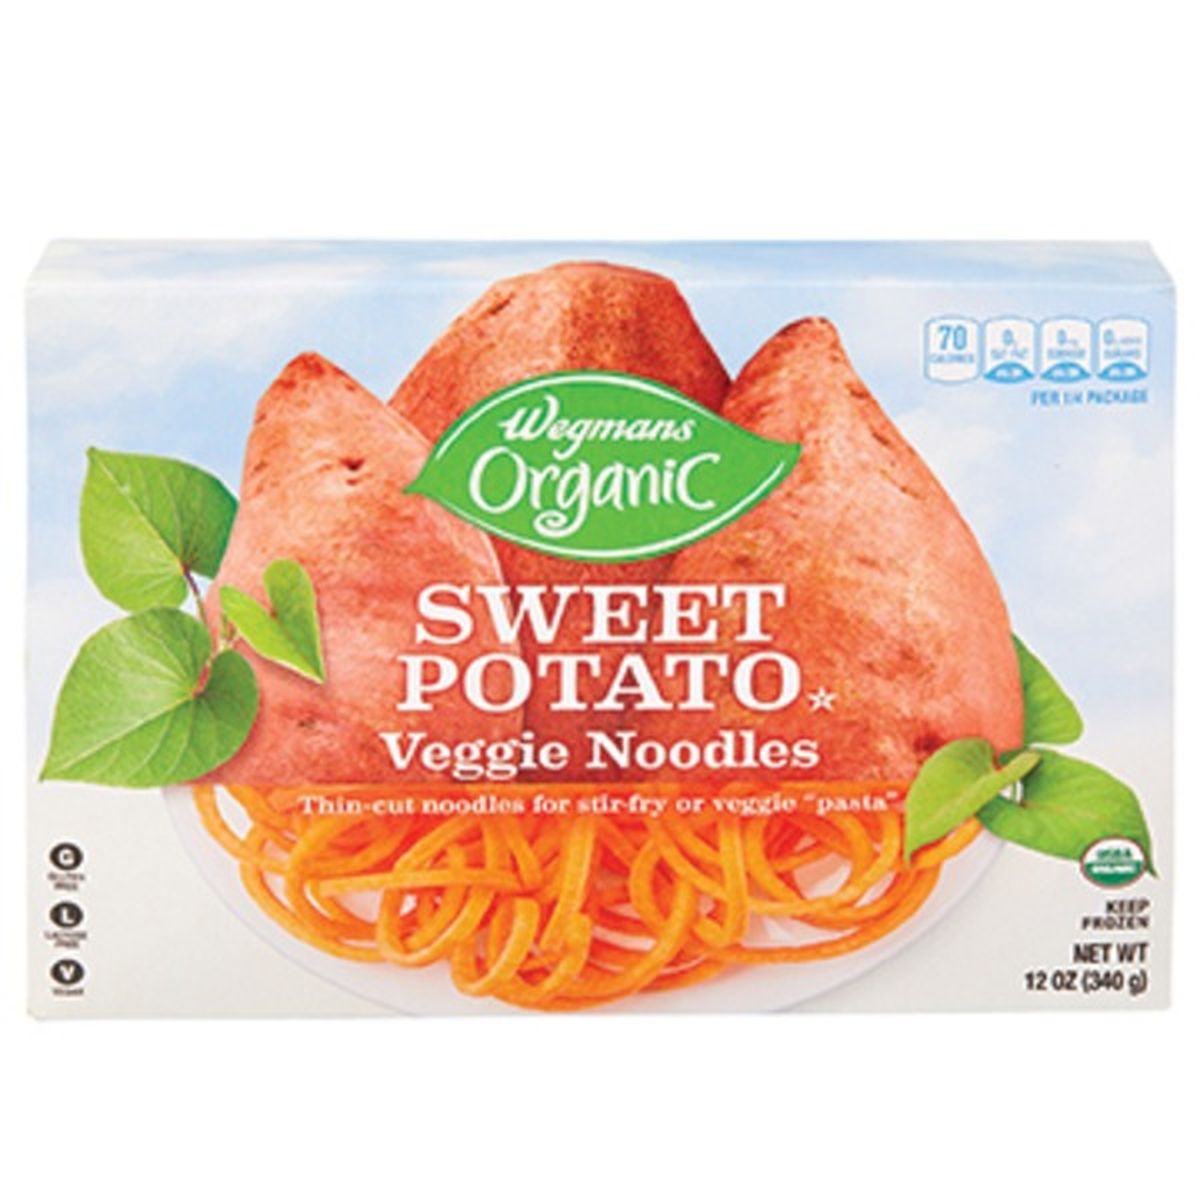 Calories in Wegmans Organic Sweet Potato Veggie Noodles